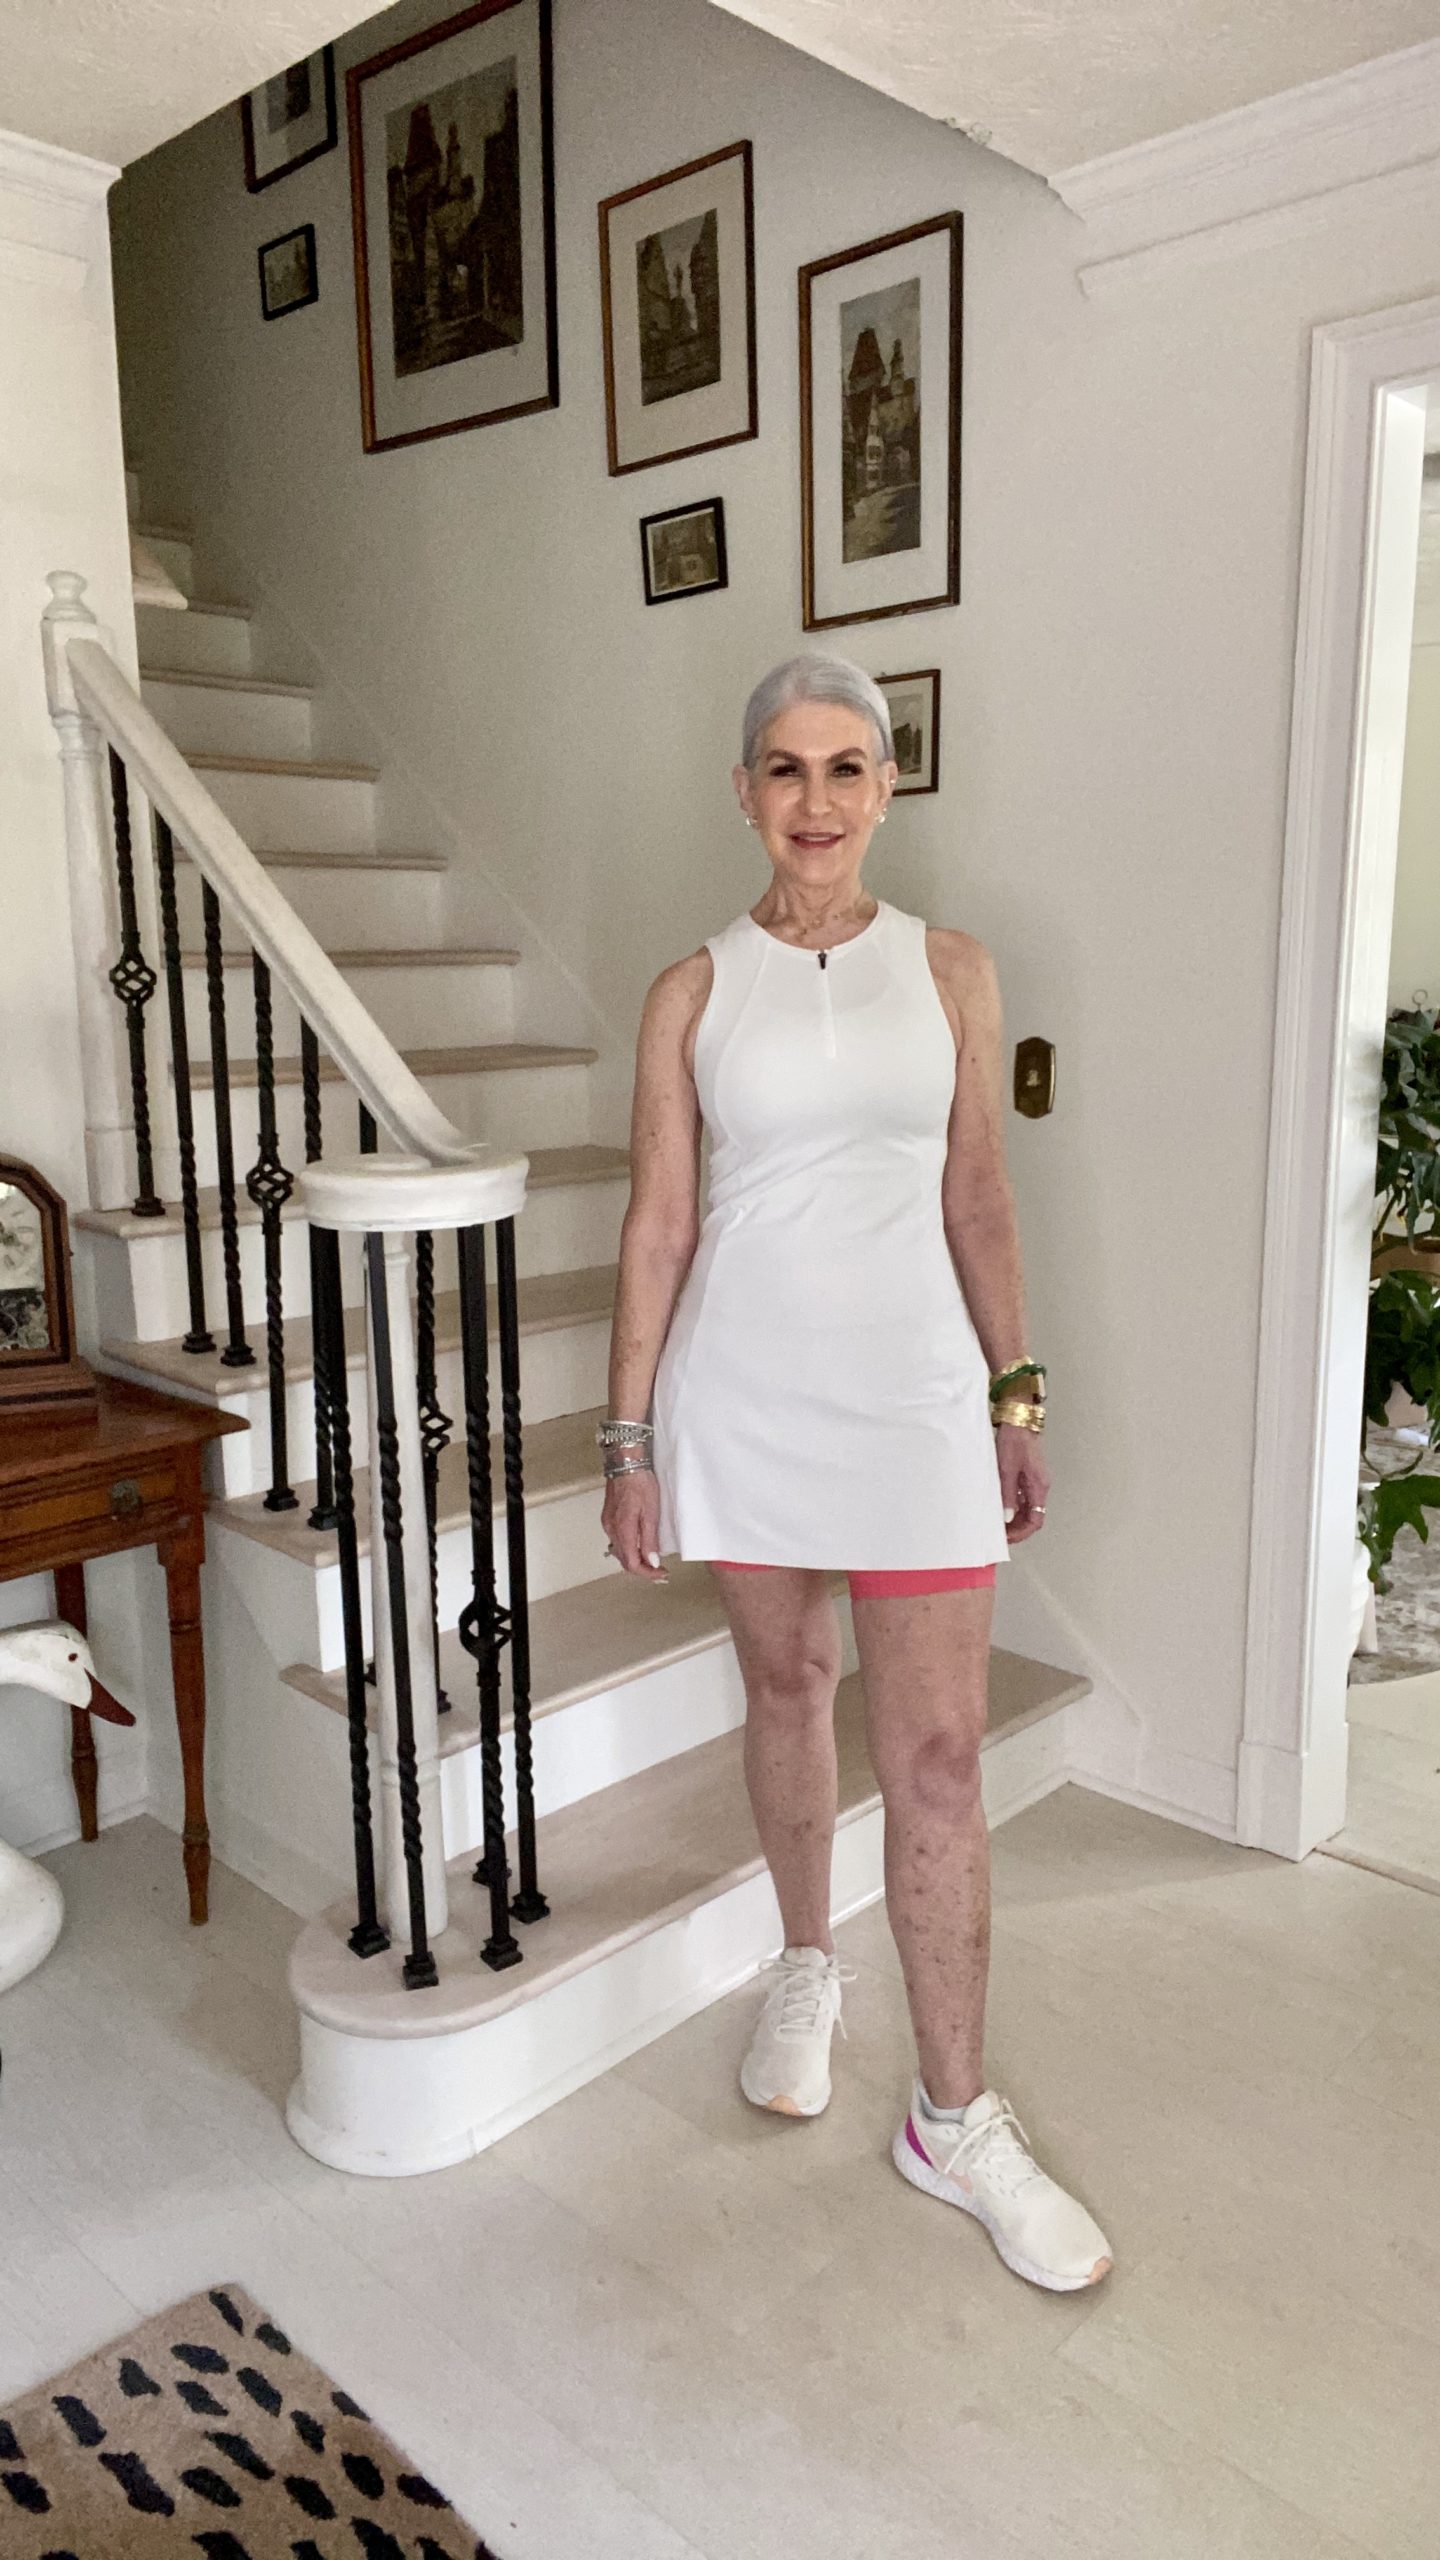 Woman wearing white tennis dress